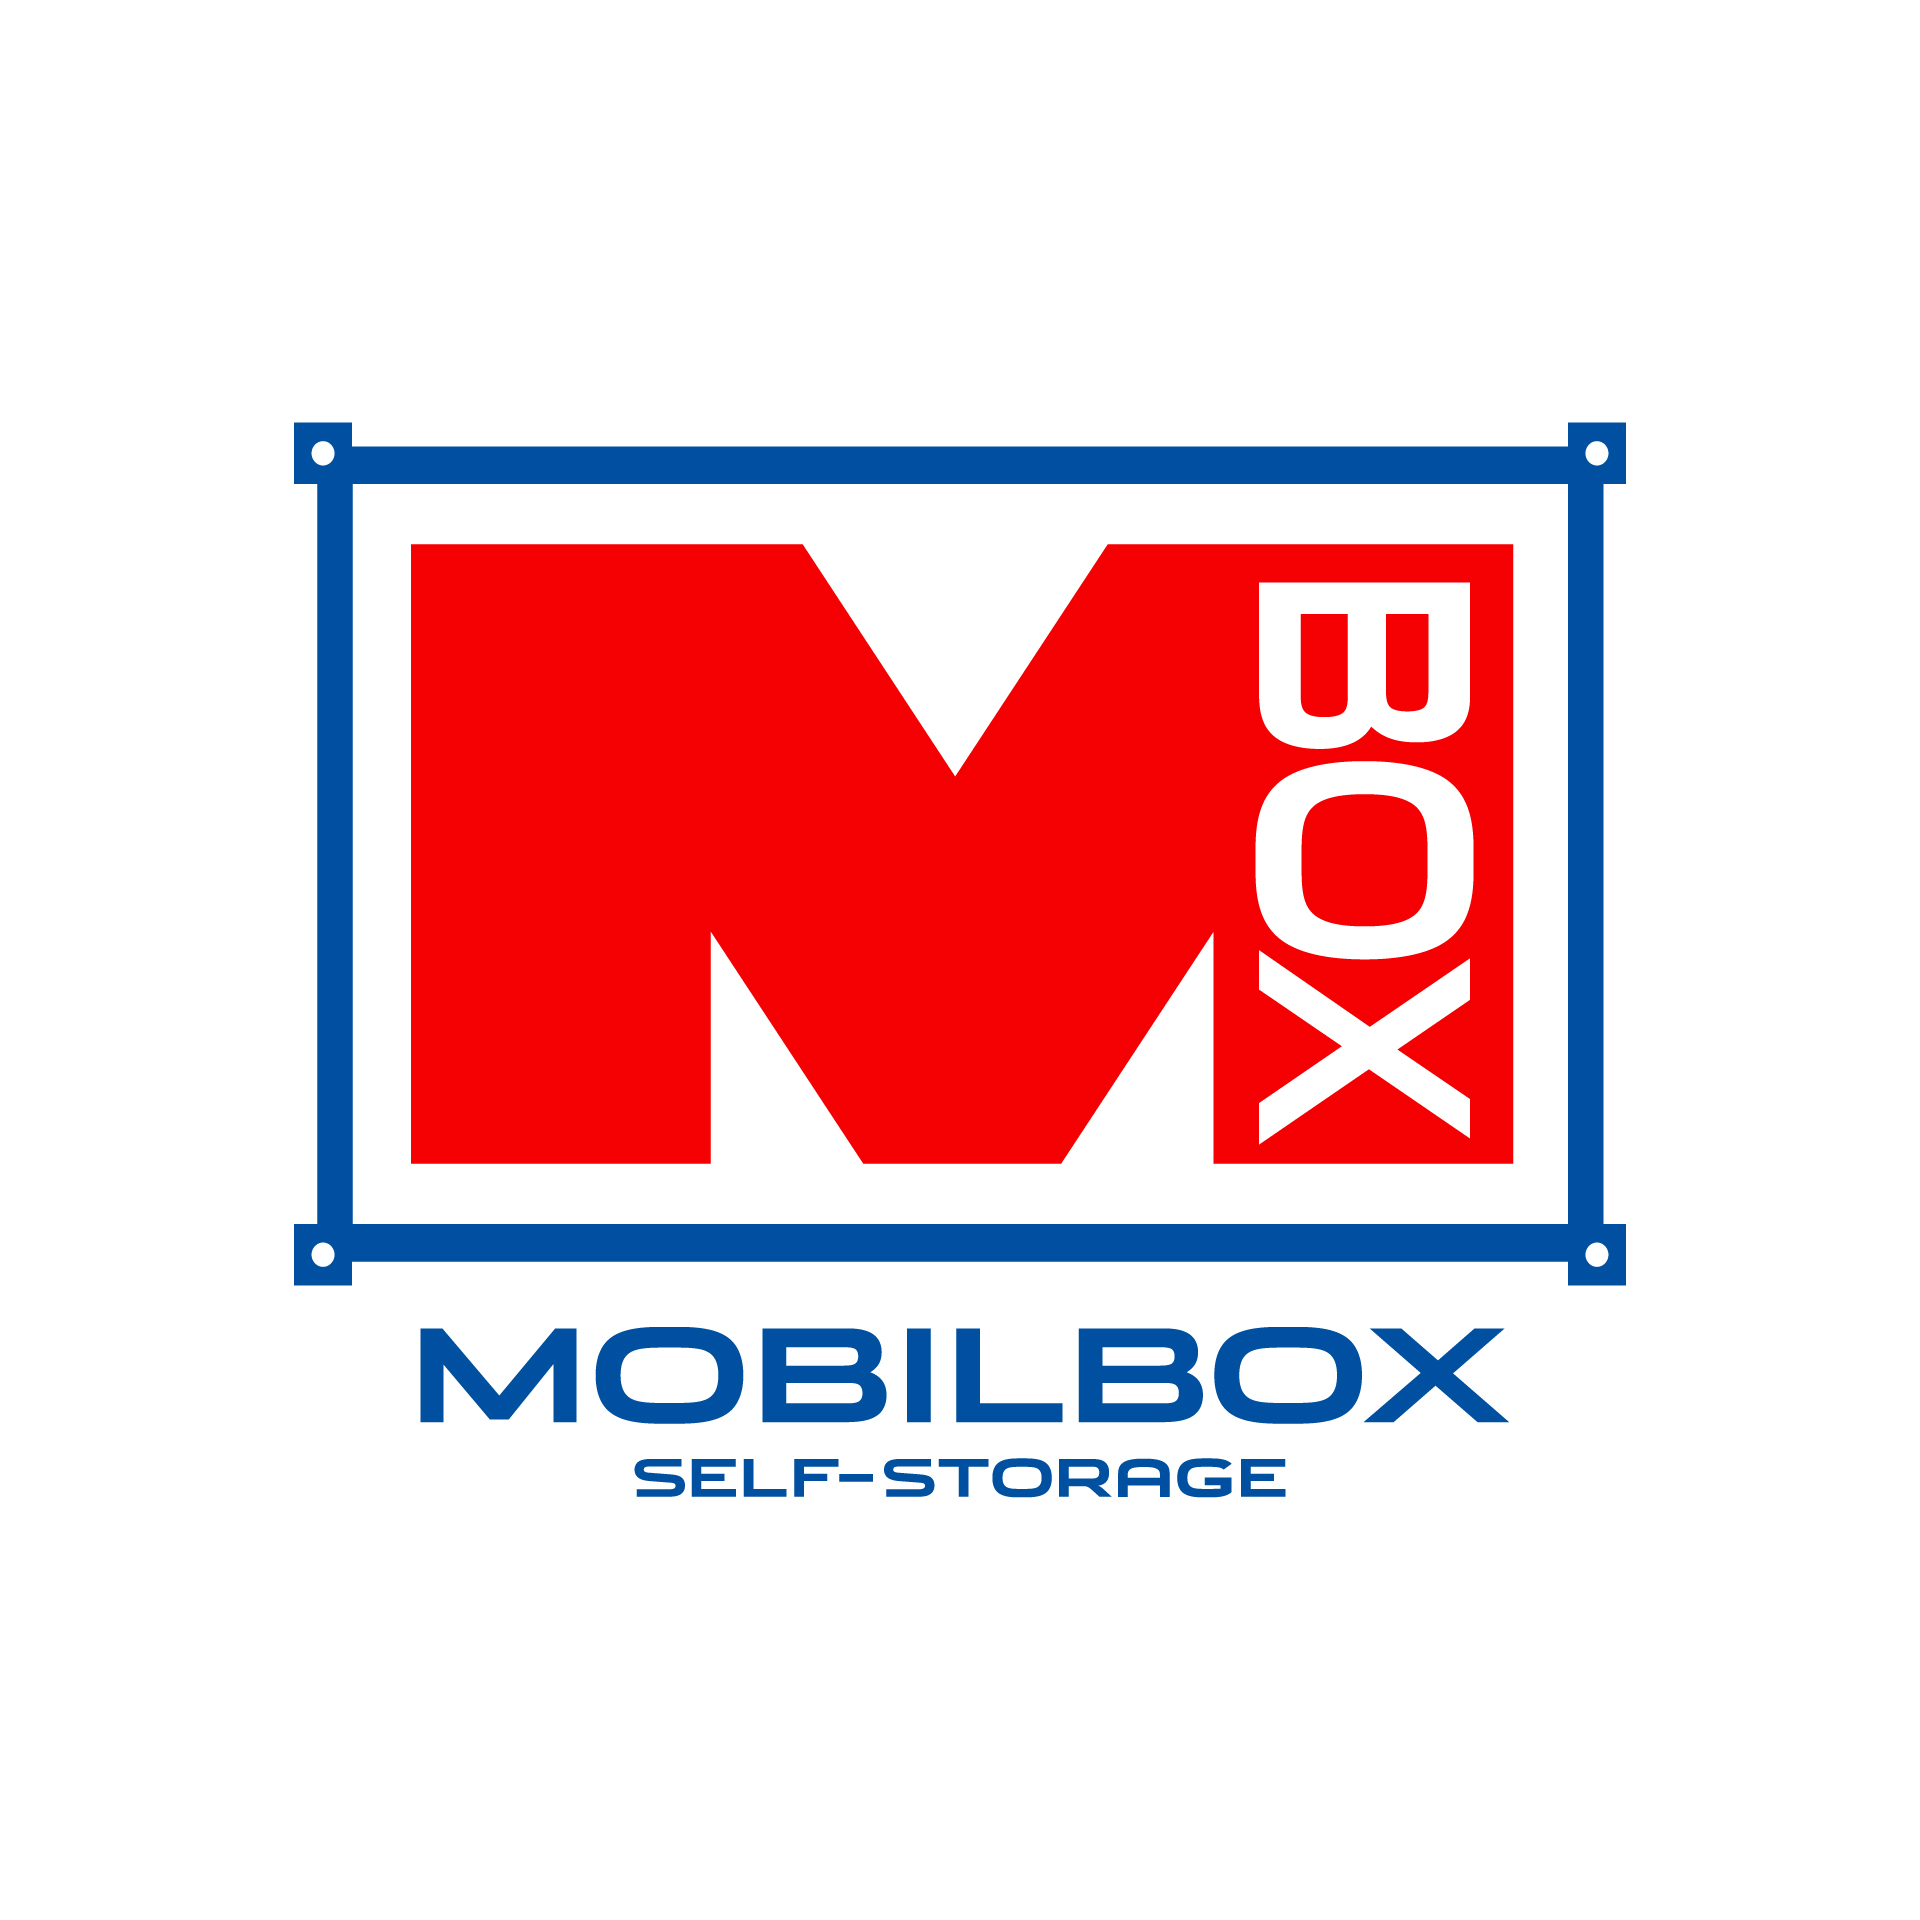 Mobilbox